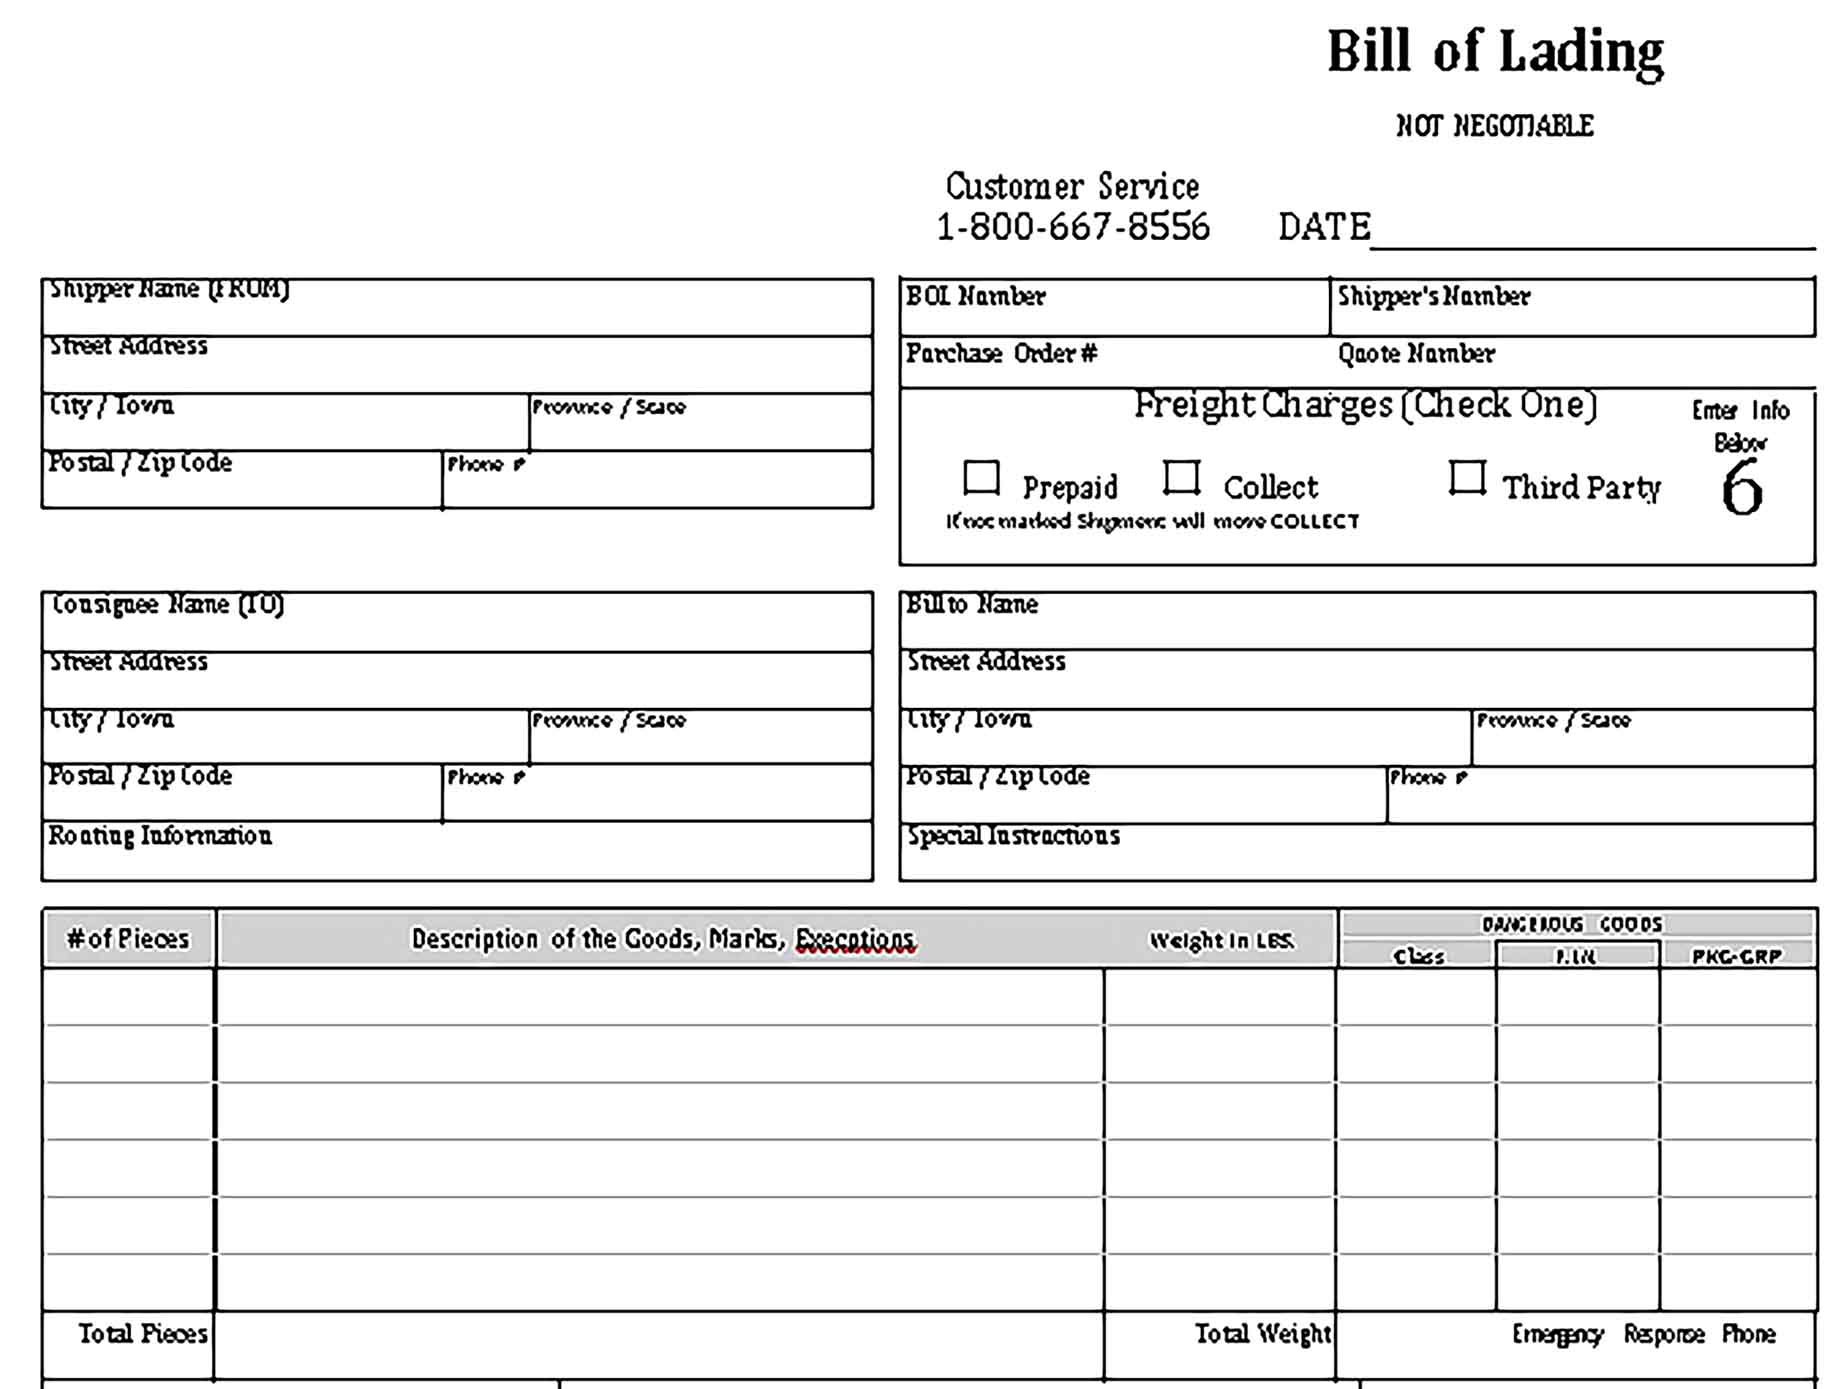 Sample bill of lading 001 Templates